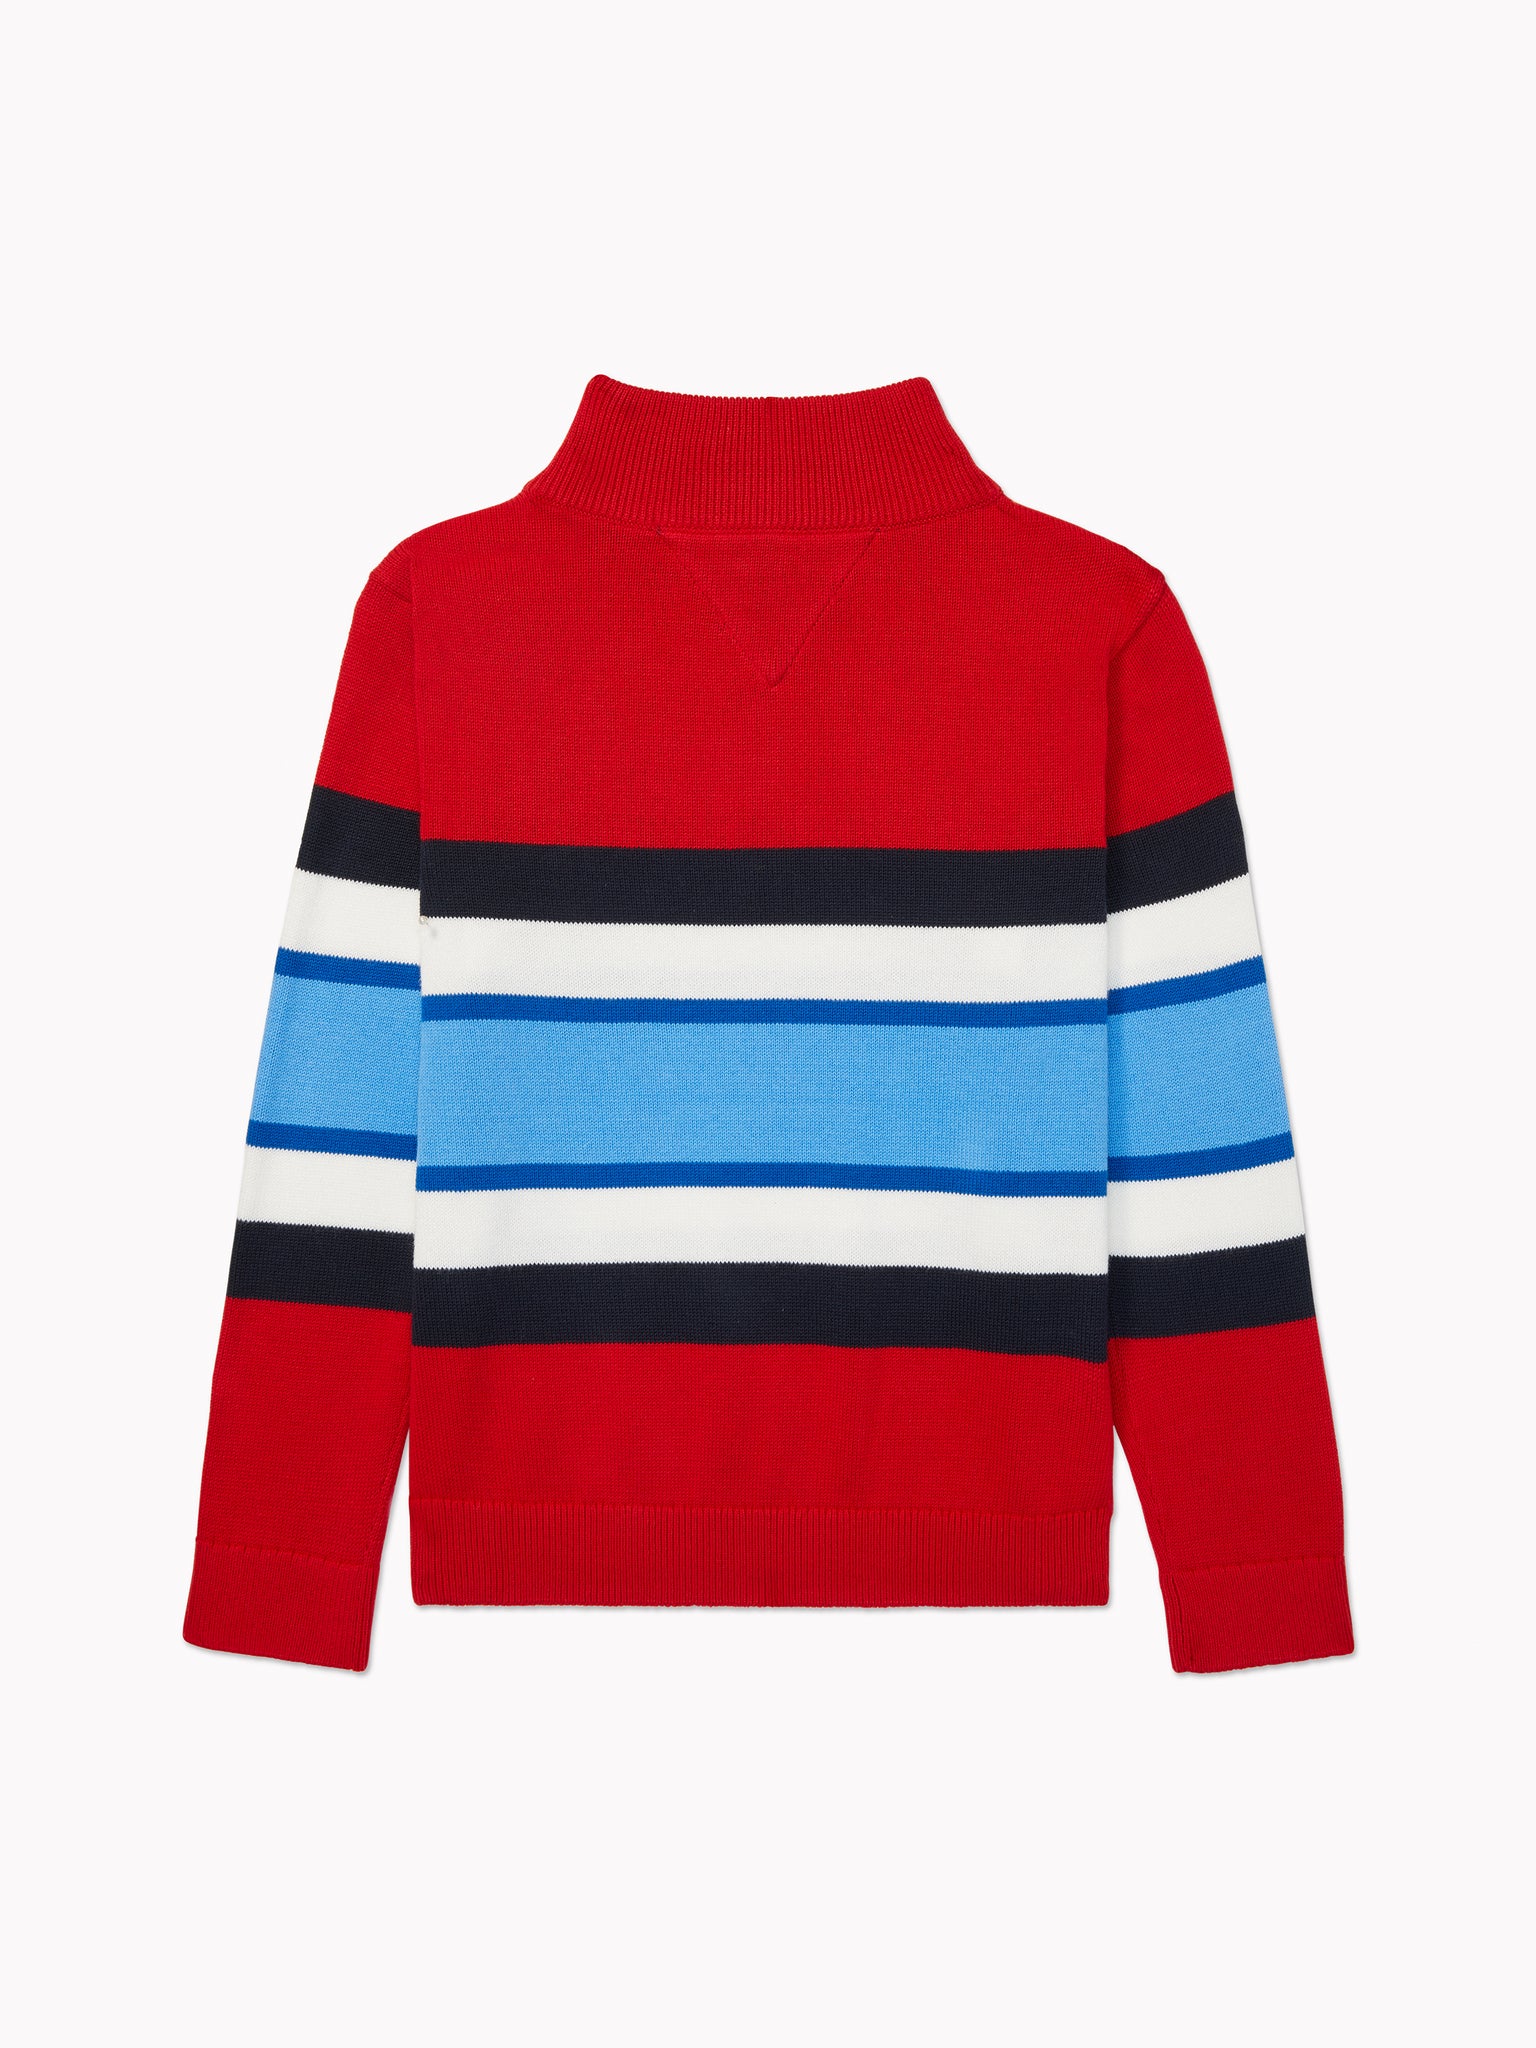 Huck Mock Sweater (Kids) - Red